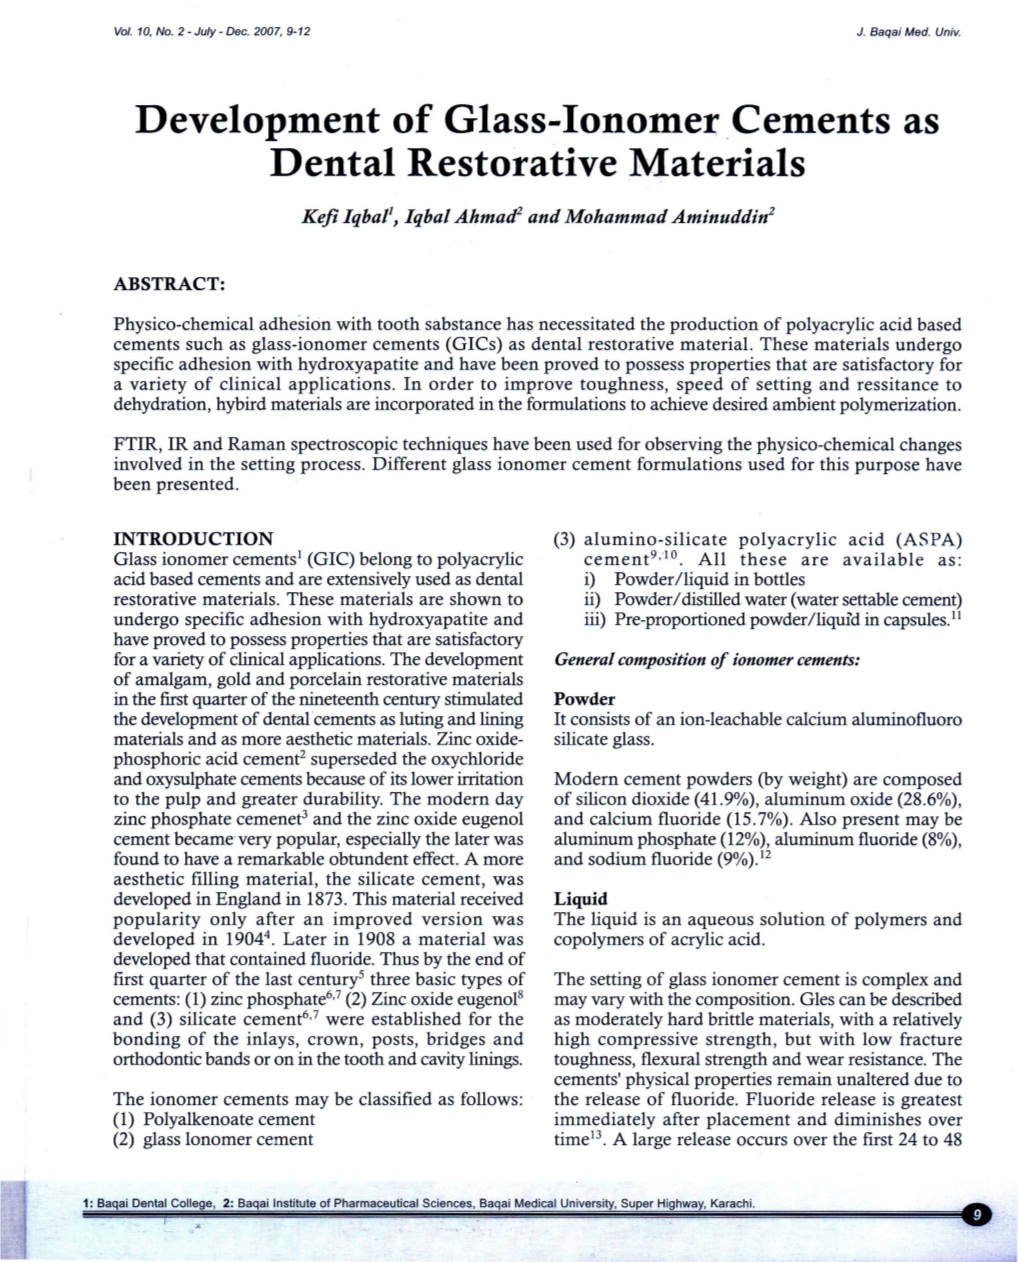 Development of Glass-Ionomercements As Dental Restorative Materials